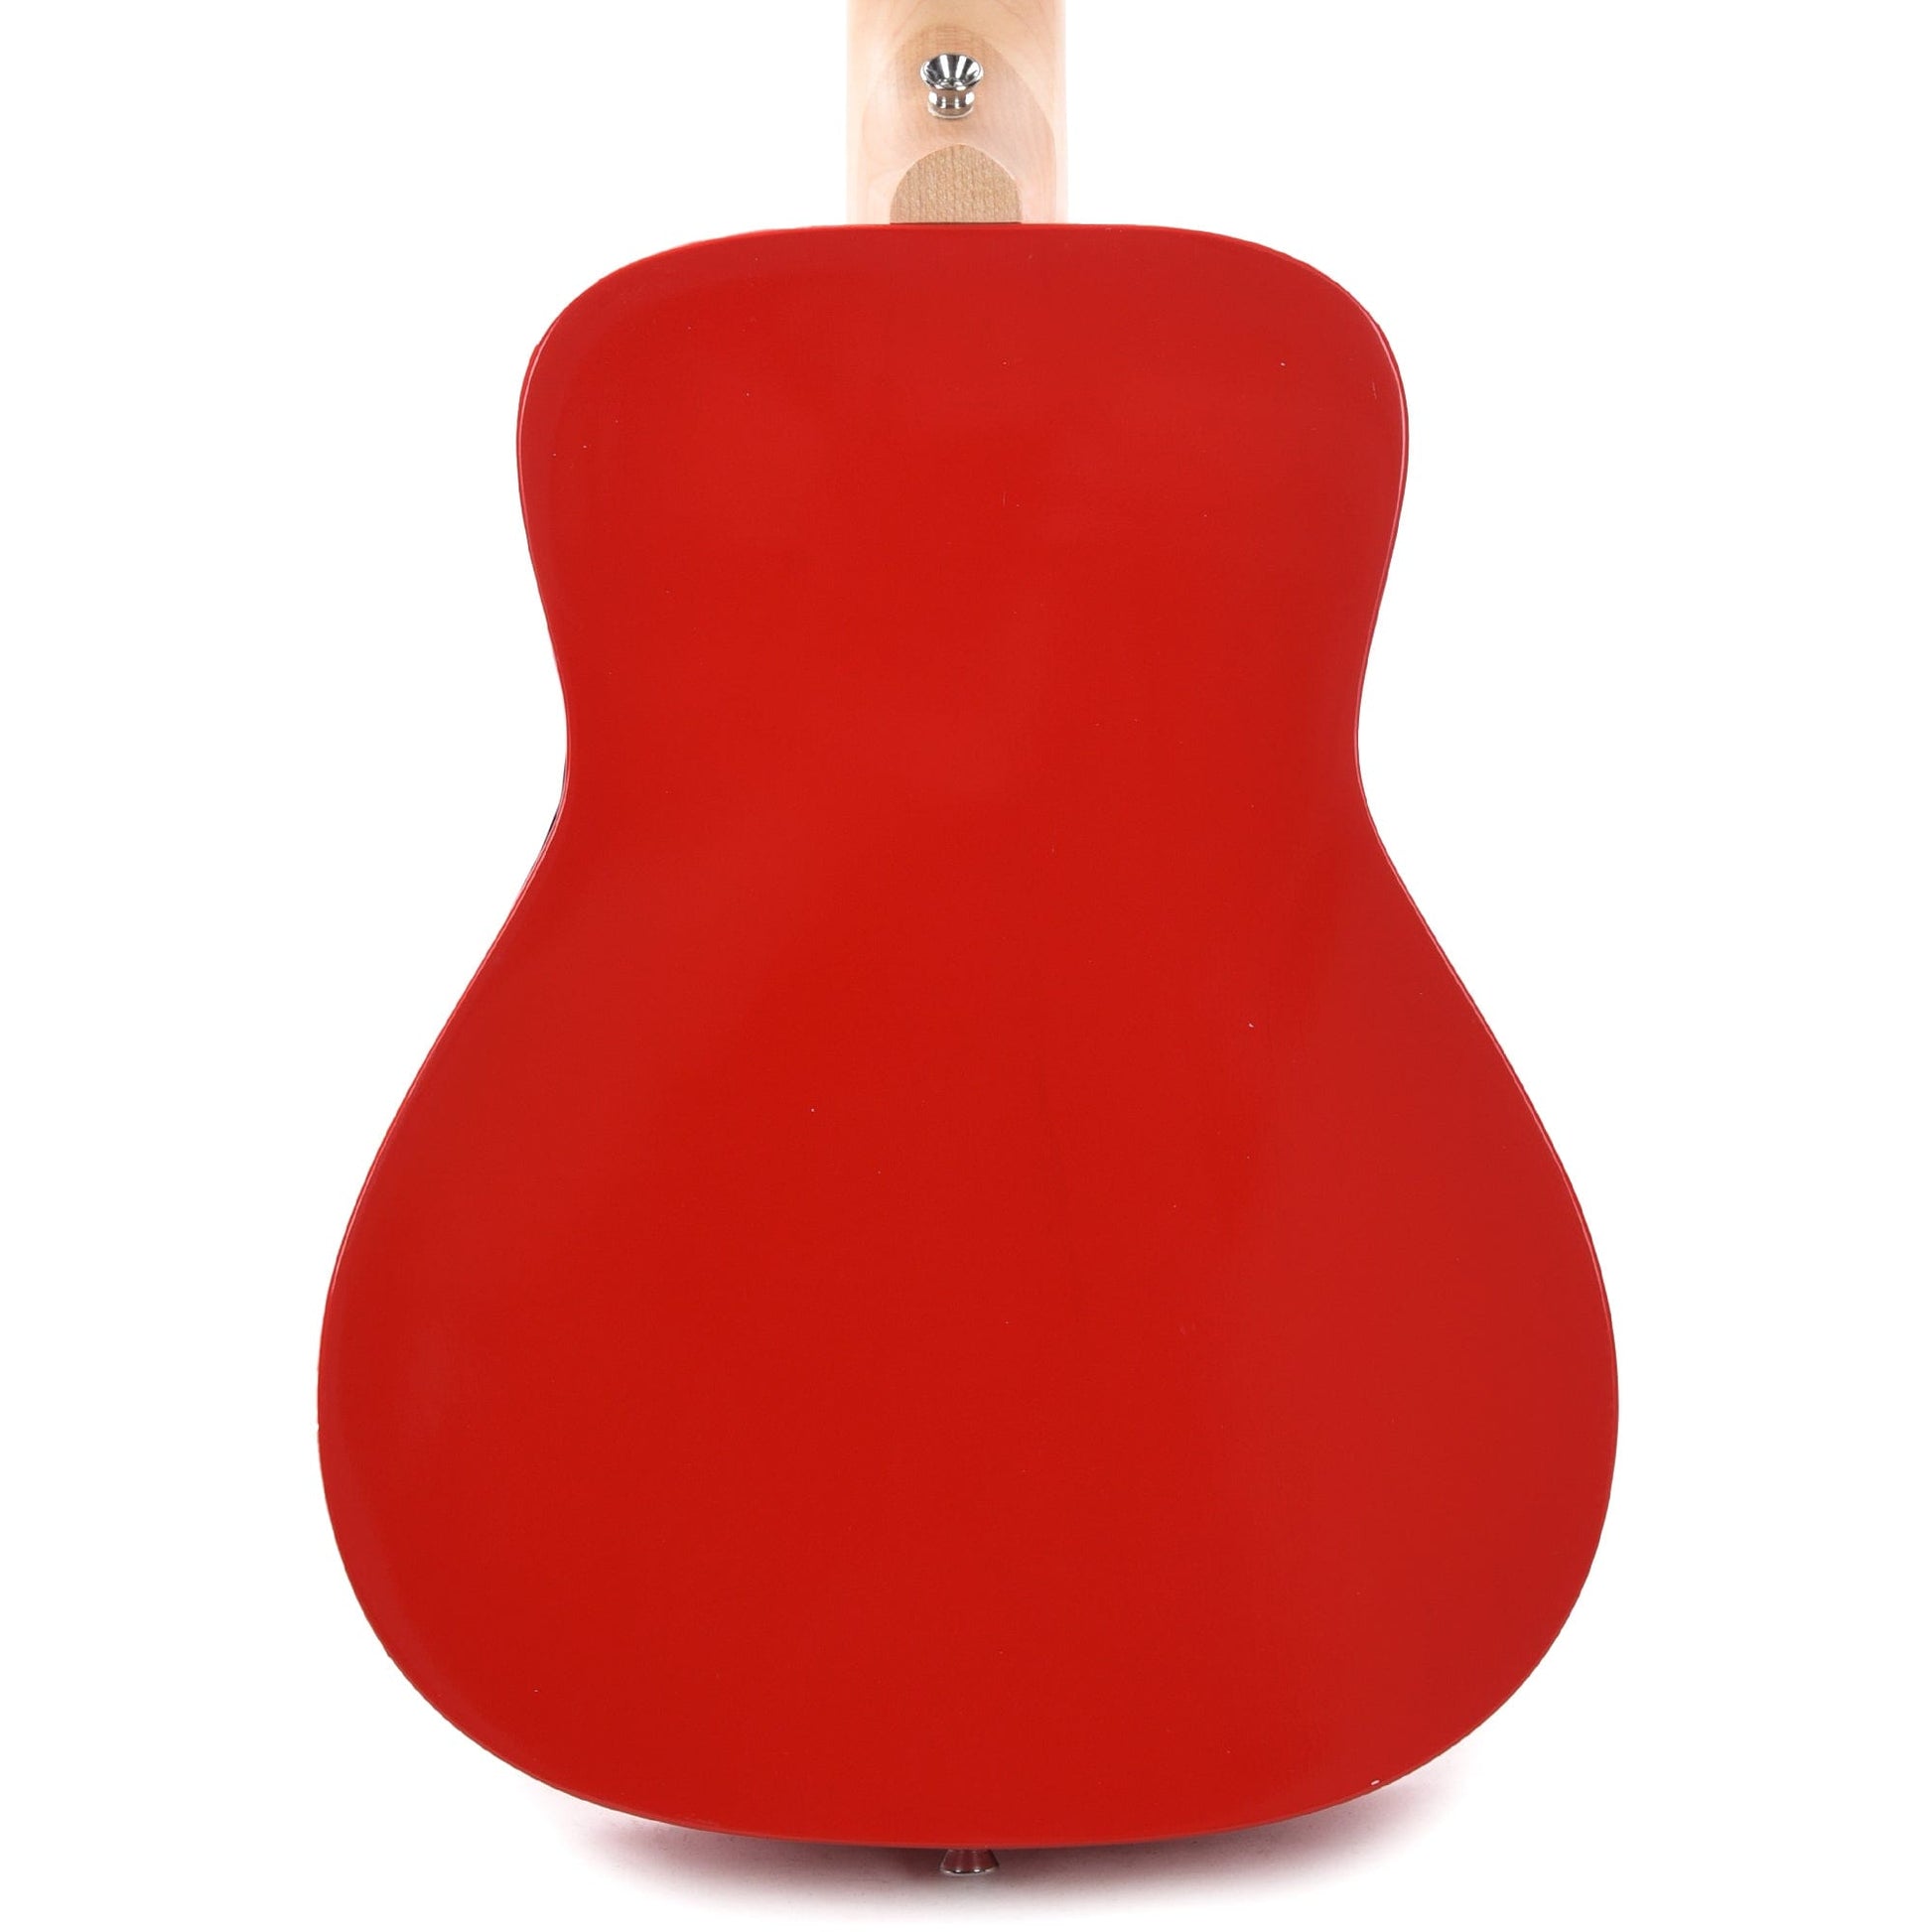 Loog Pro VI Acoustic Red Acoustic Guitars / Classical